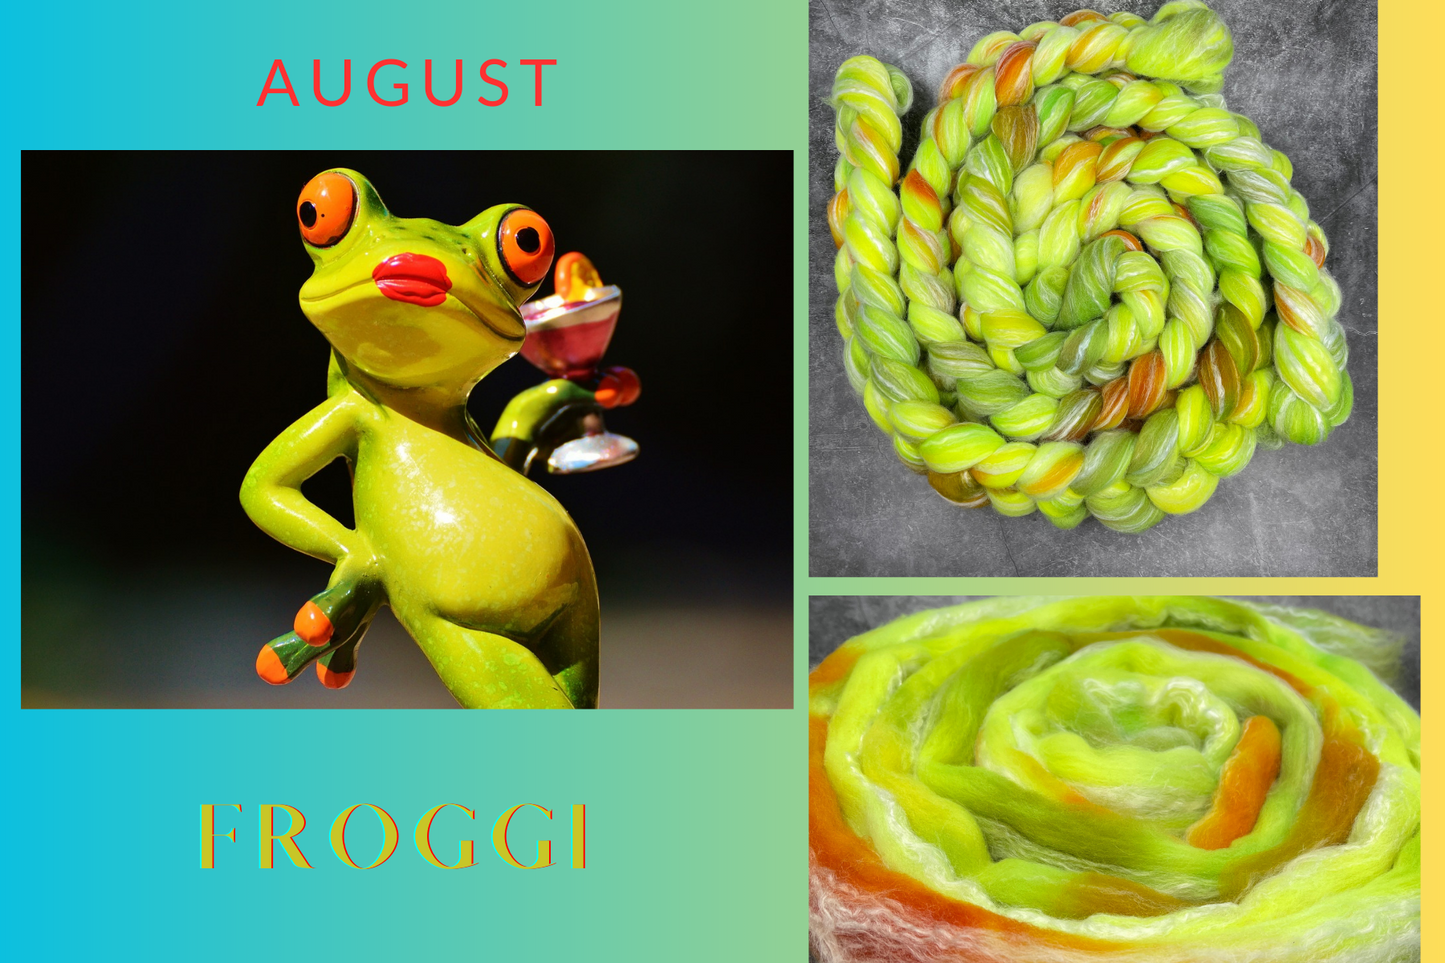 FROGGI Mottofärbung für August - Merino Pearl Banane